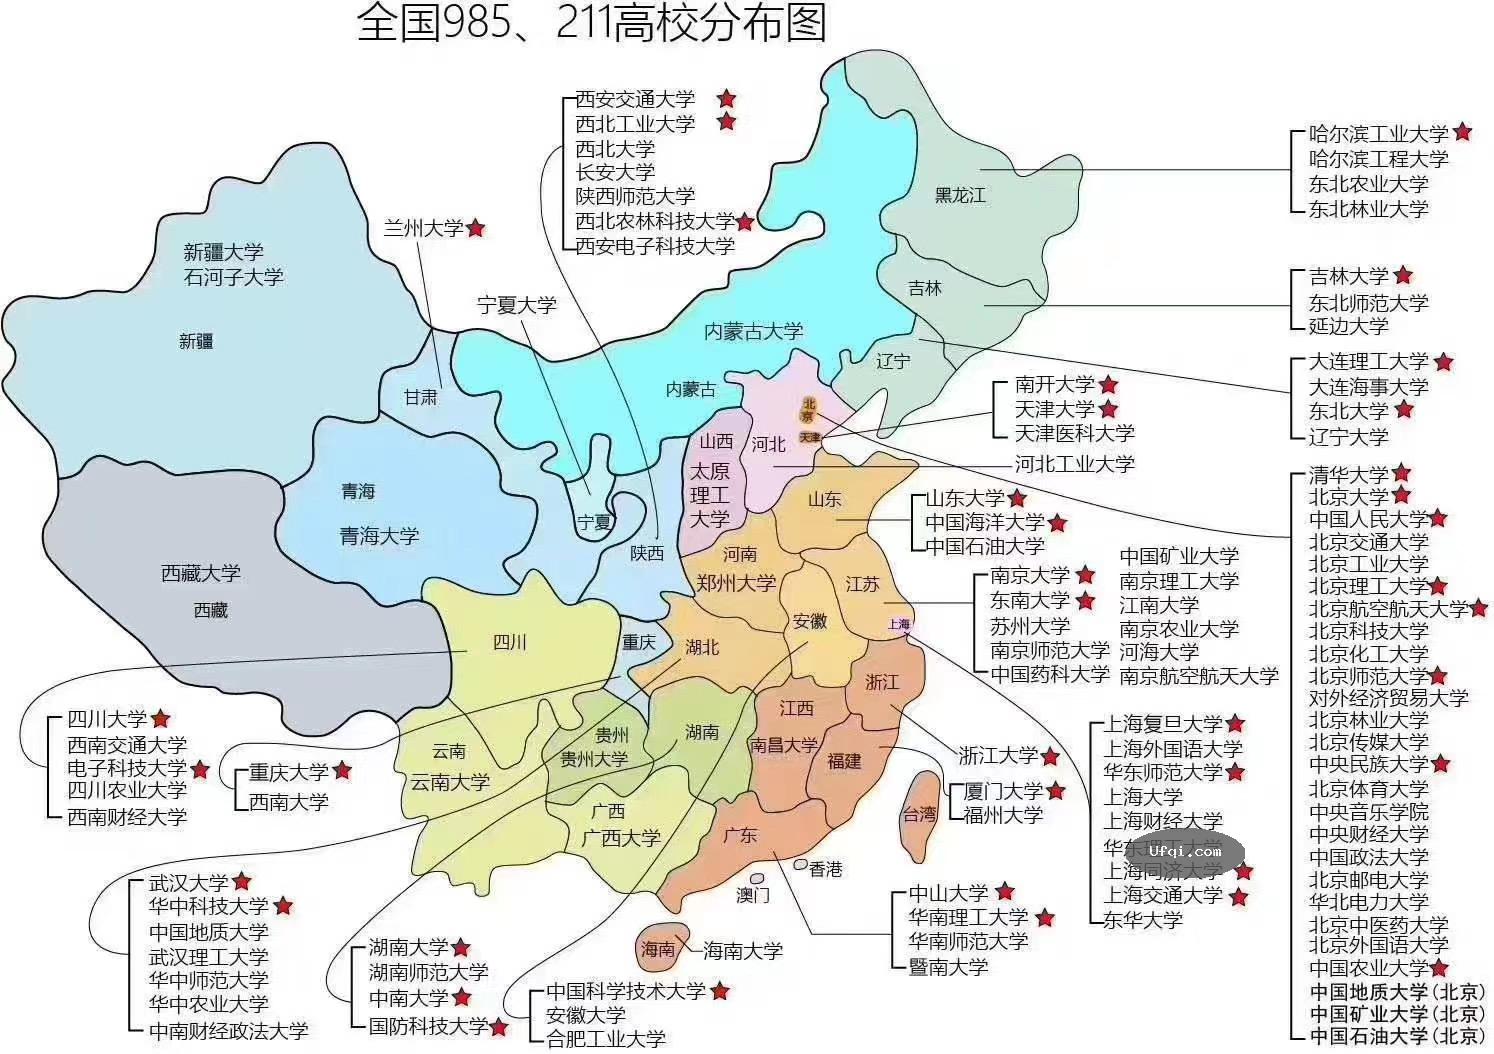 中国高等学校985/211高校地区分布图Map of 985/211 Colleges and Universities, China